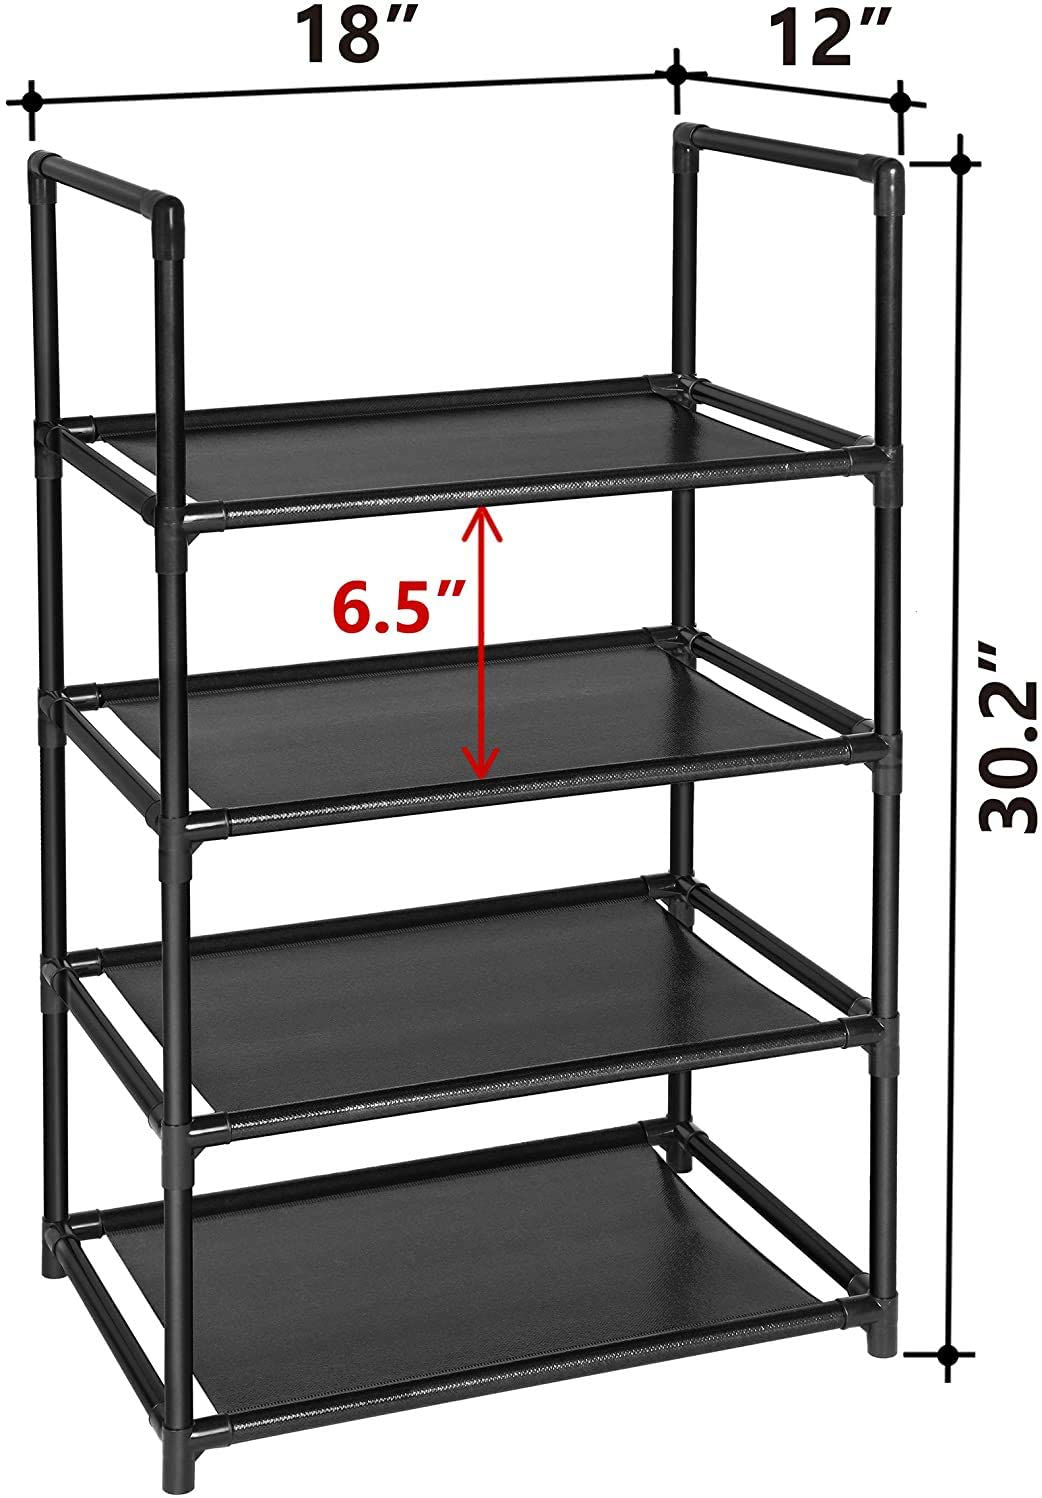 4 or 8 Tiers Black Sturdy Shoe Rack Shelf Non-Woven Fabric Shoe Tower Organizer